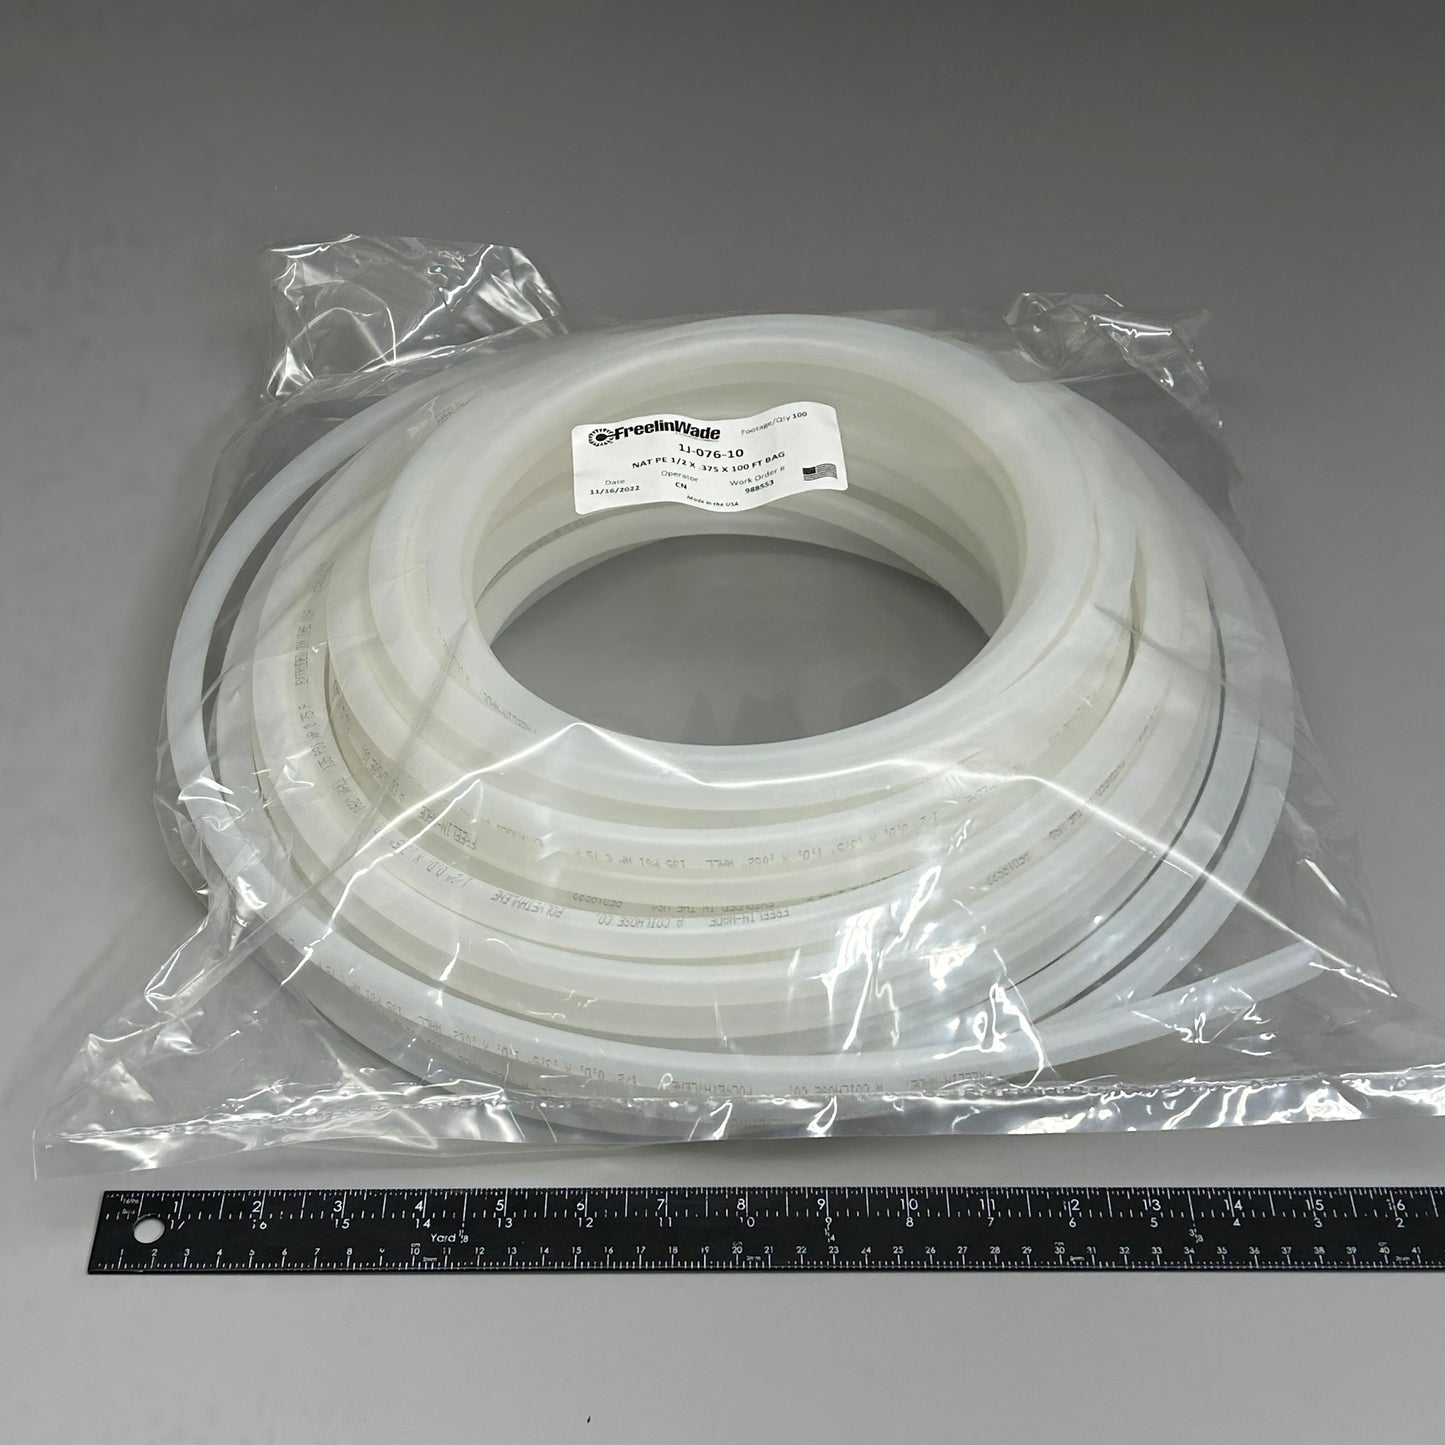 FREELIN-WADE Natural Polyethylene Tubing 100 ft 1J-076-10 (New)